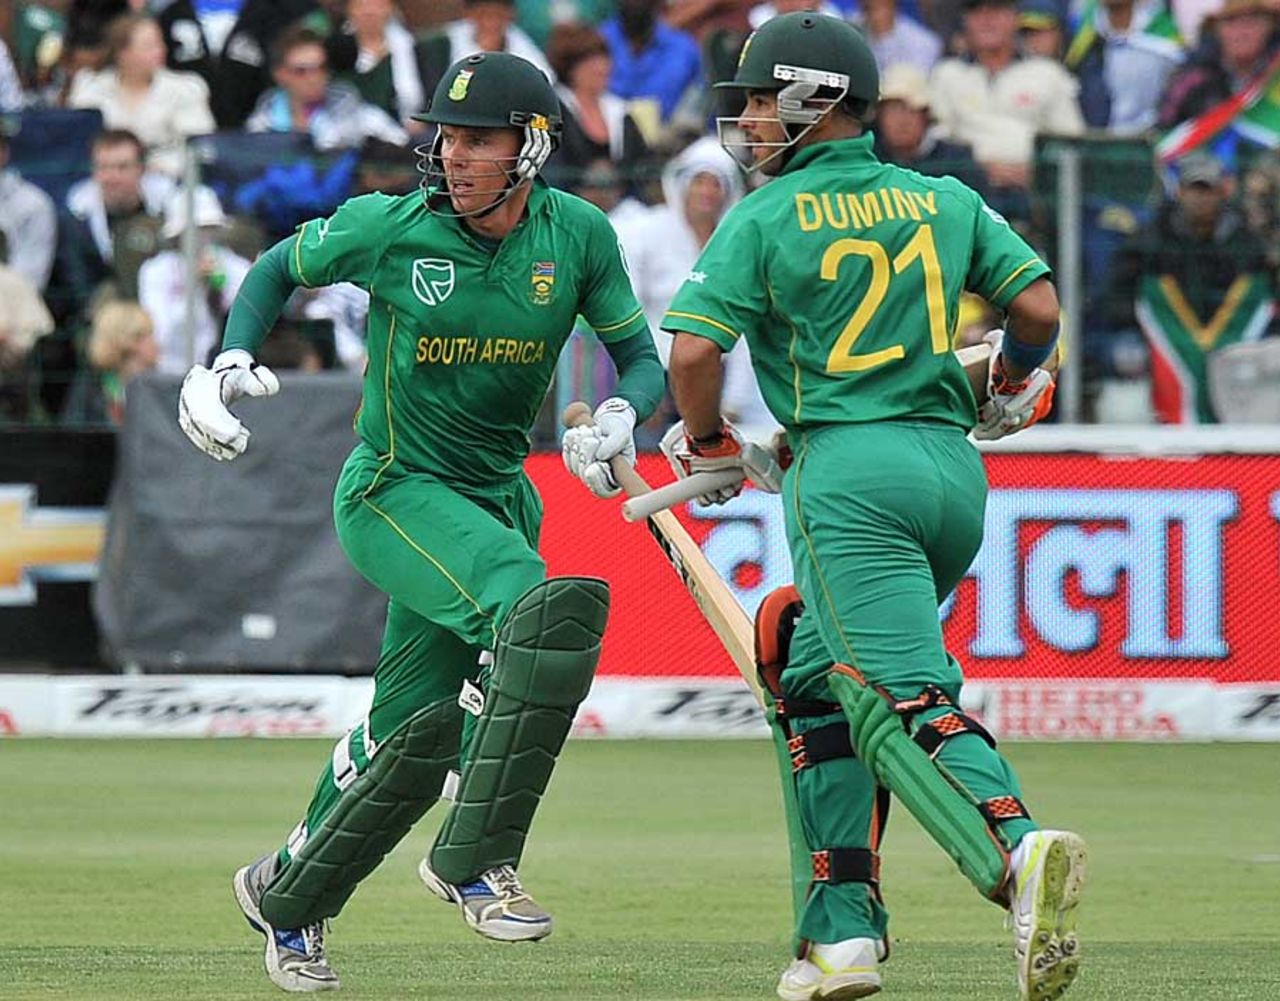 Johan Botha and JP Duminy took South Africa to 265, South Africa v India, 4th ODI, Port Elizabeth, January 21, 2011